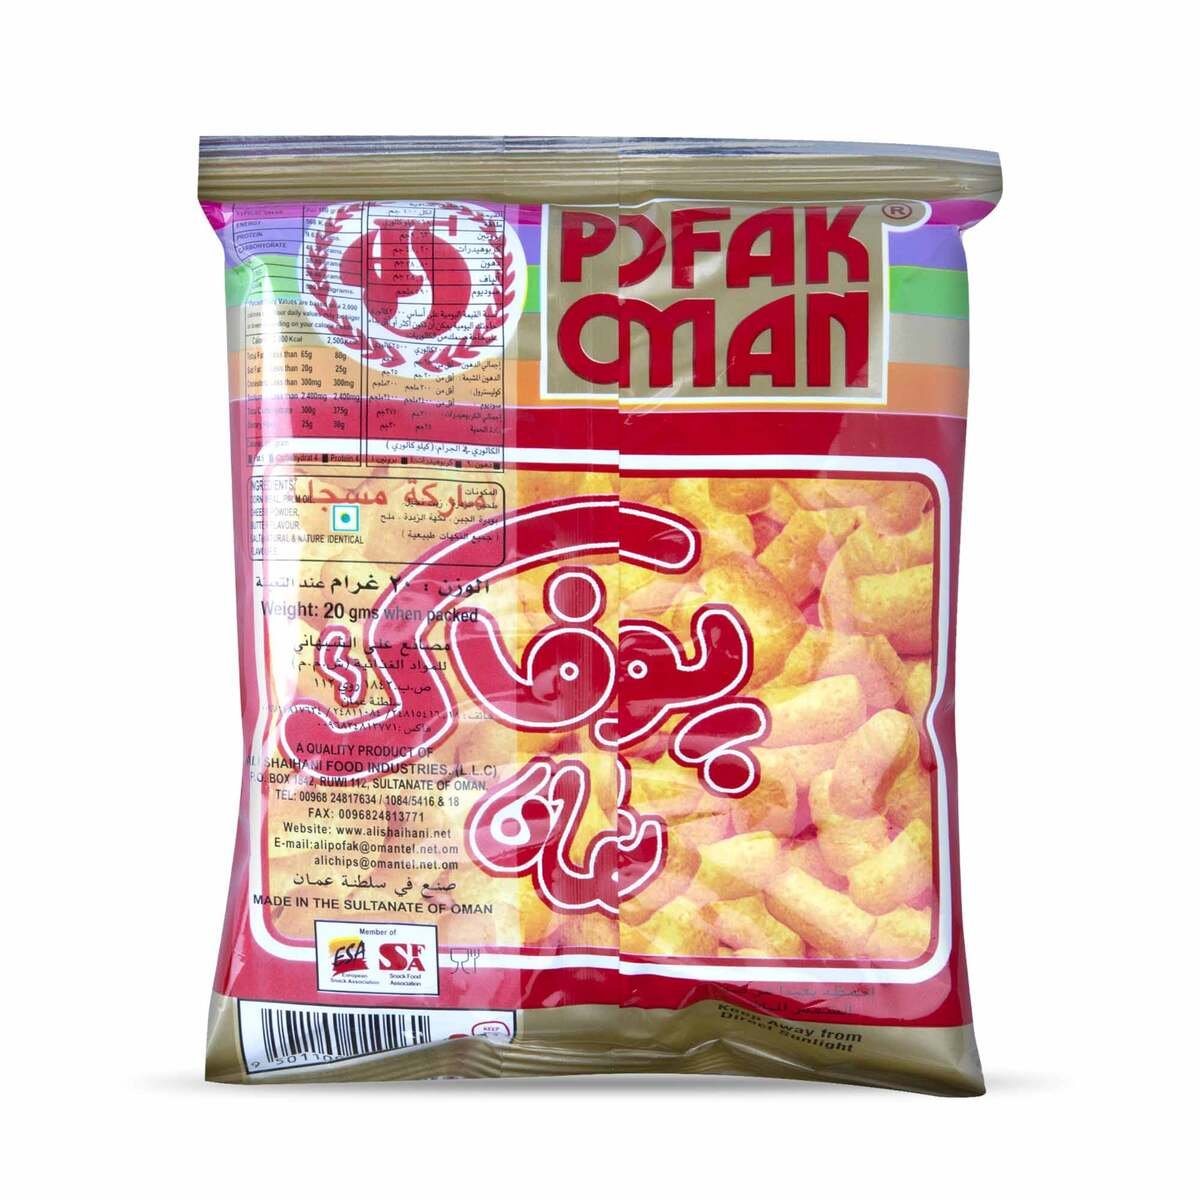 Oman Pofak Chips 25 x 20g